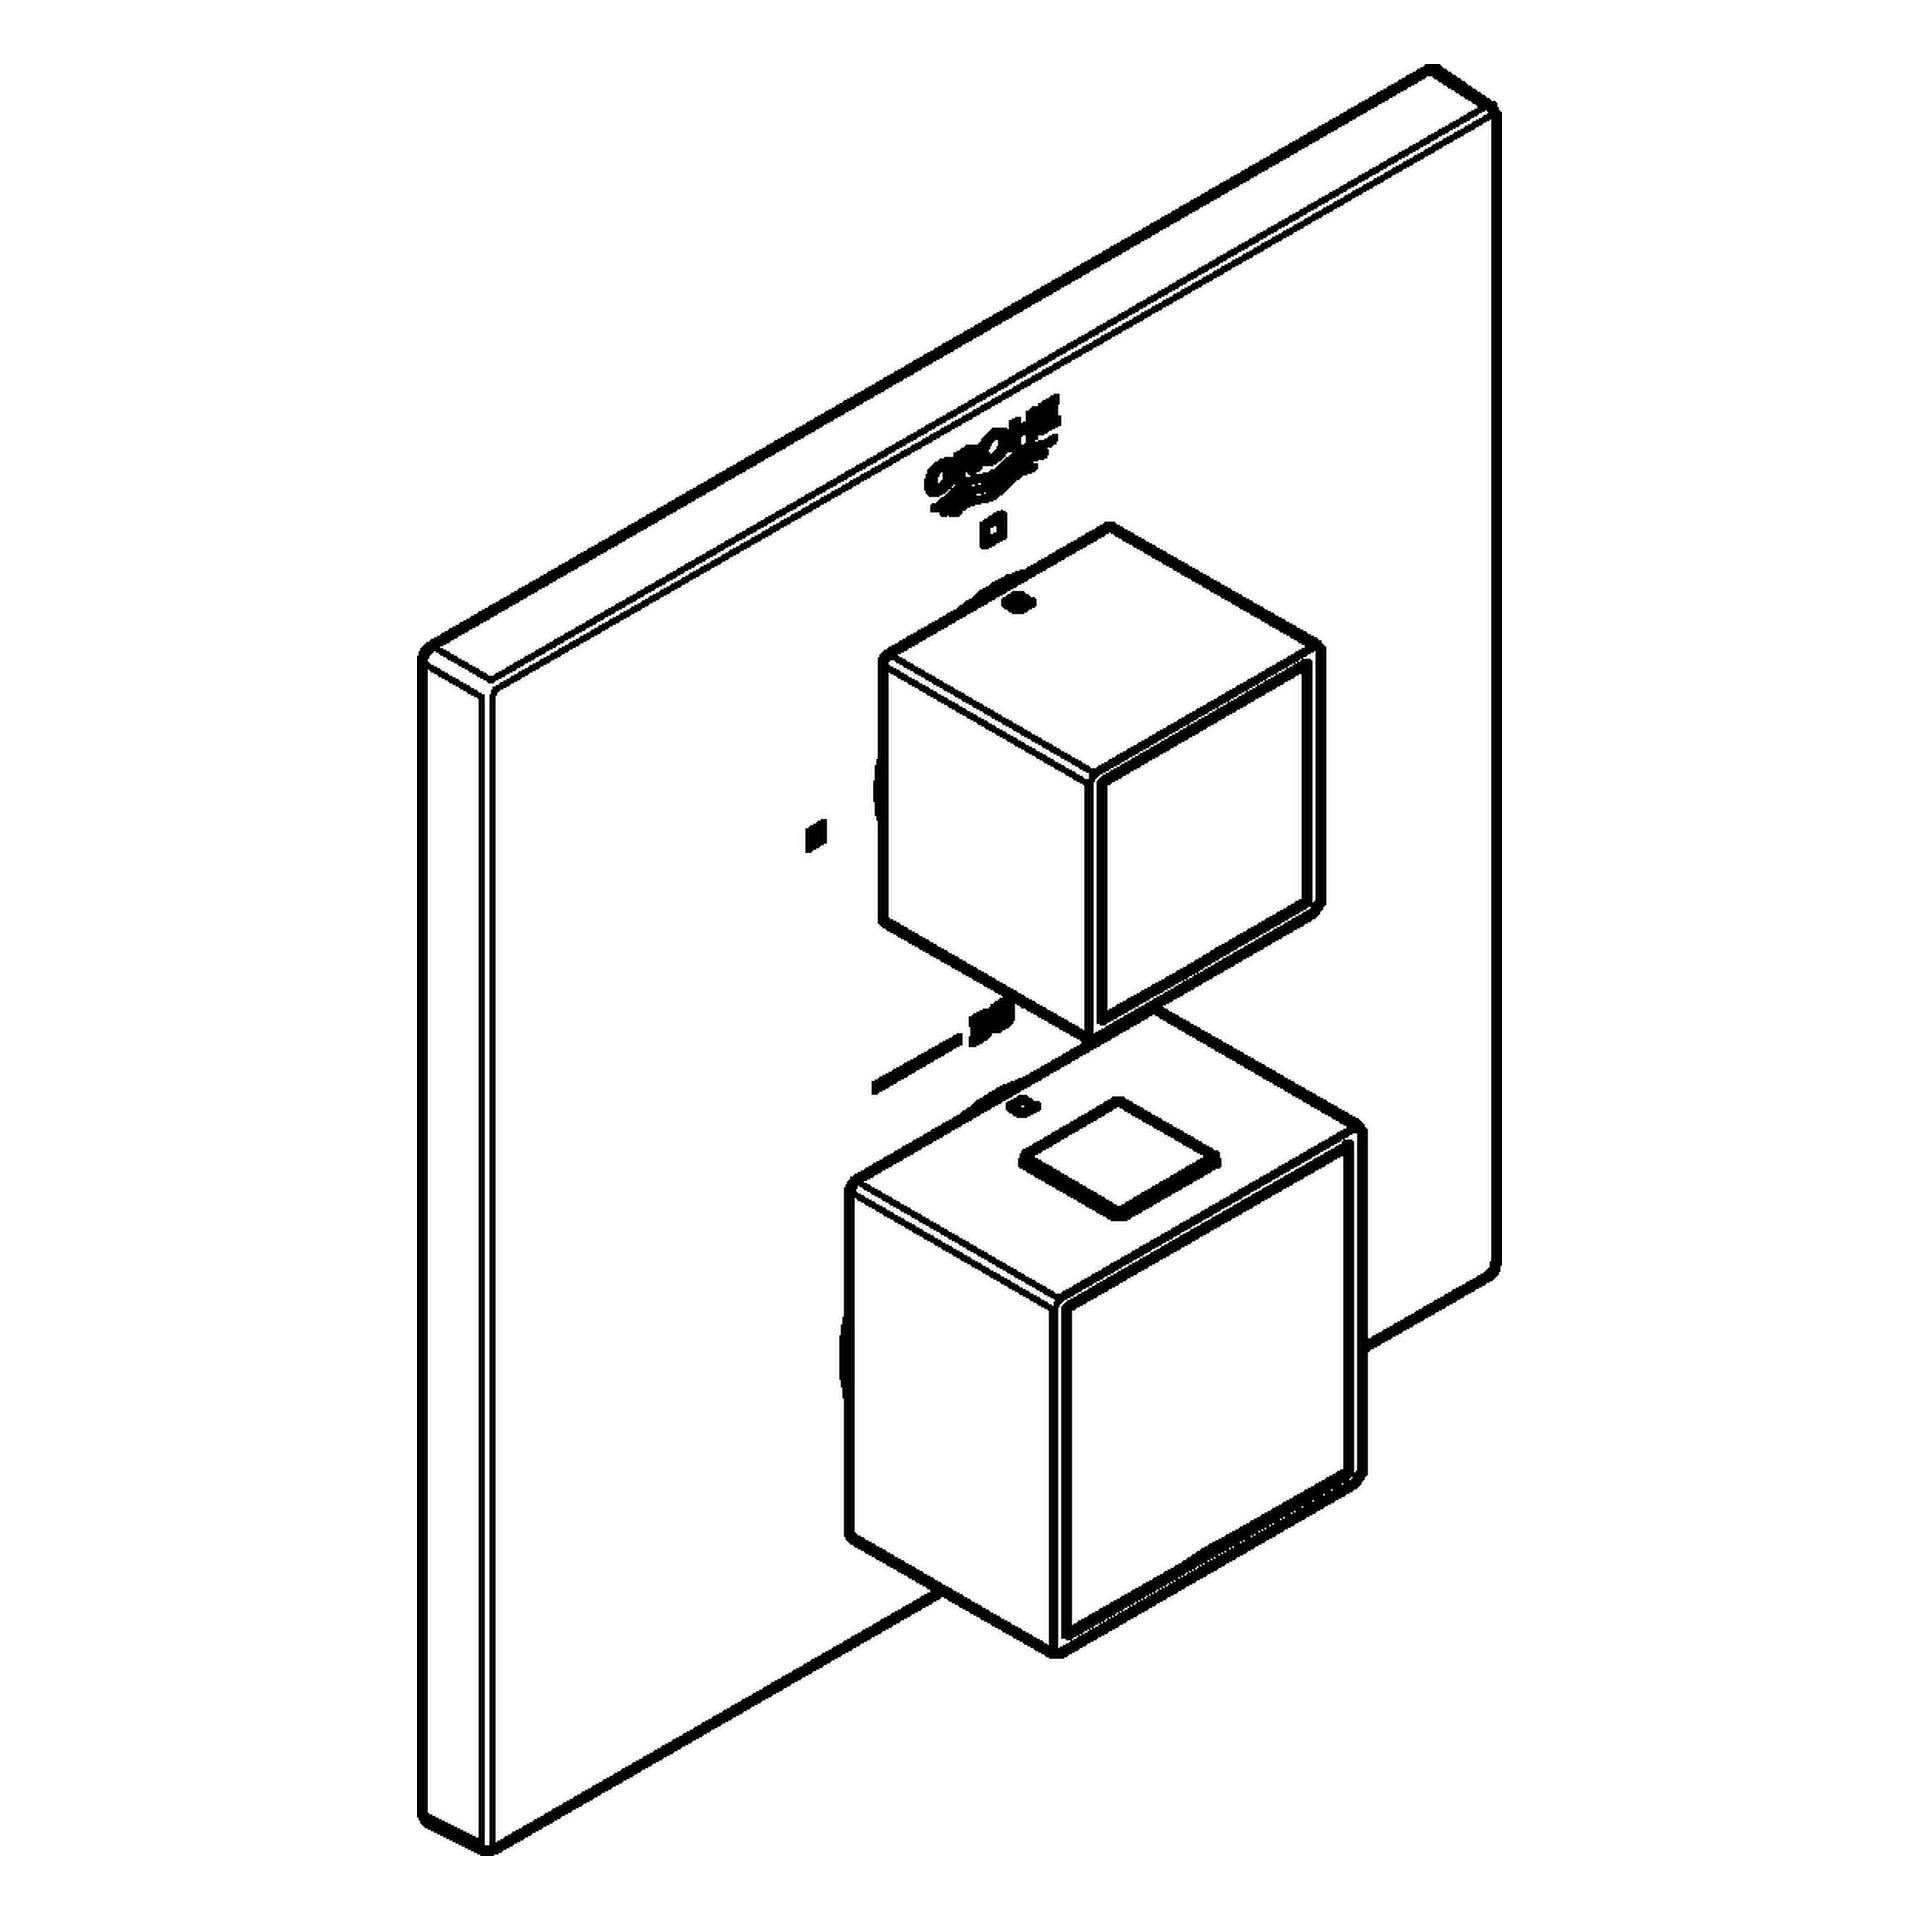 Thermostat-Brausebatterie Grohtherm Cube 24153, Fertigmontageset für Rapido SmartBox, chrom